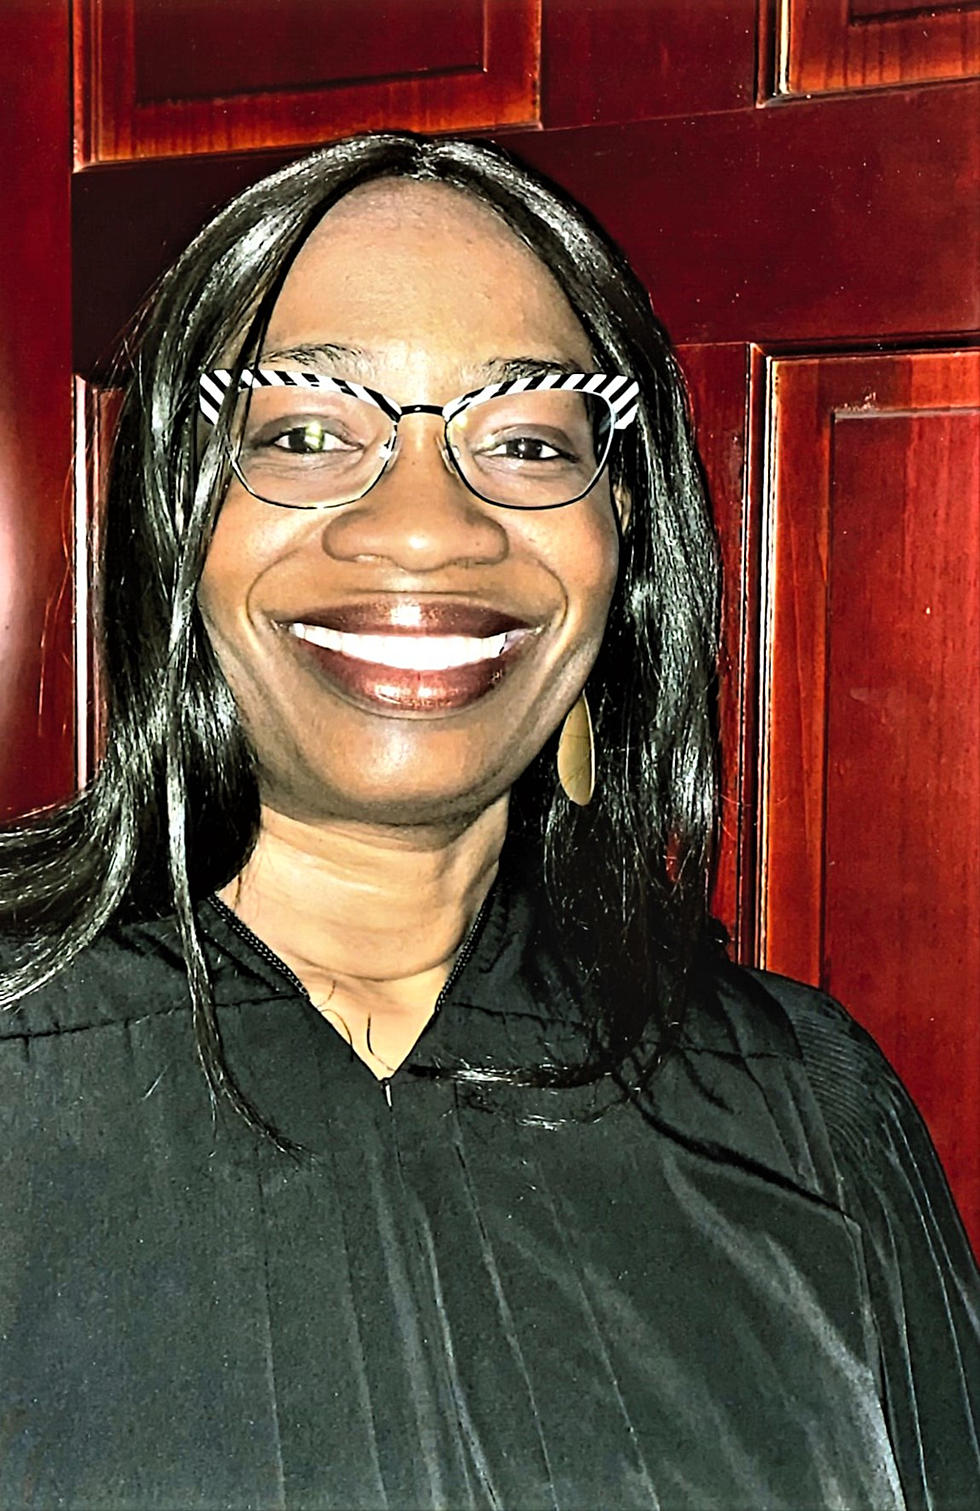 Parson Appoints First Black Woman to Missouri Supreme Court